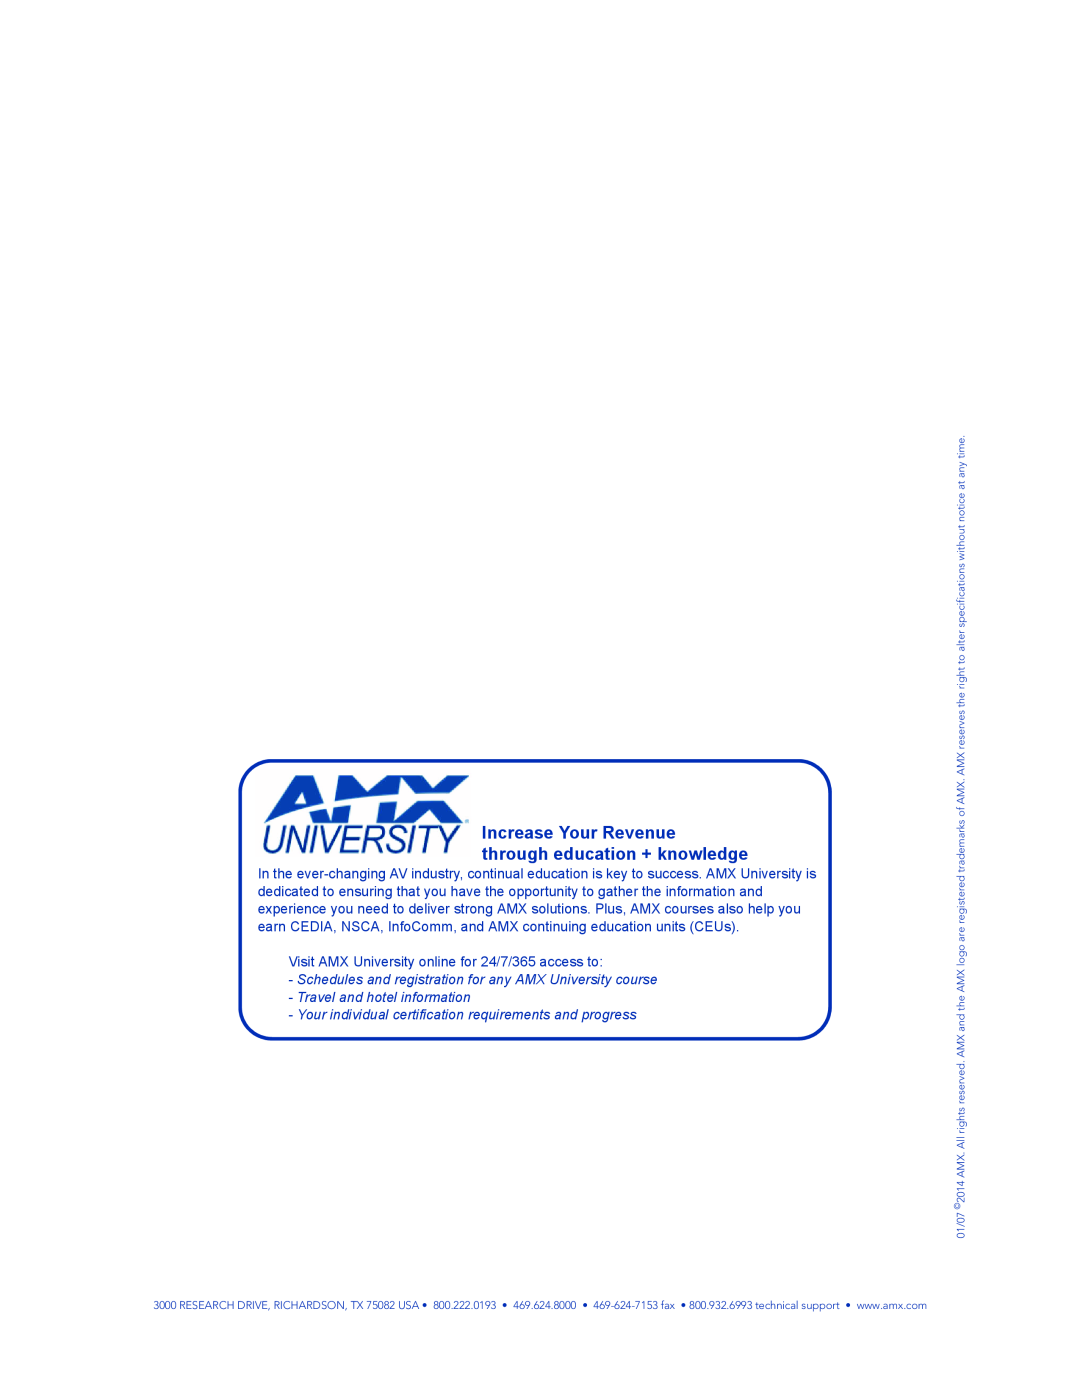 AMX HDMI-UTPRO-0808 instruction manual Travel and hotel information 